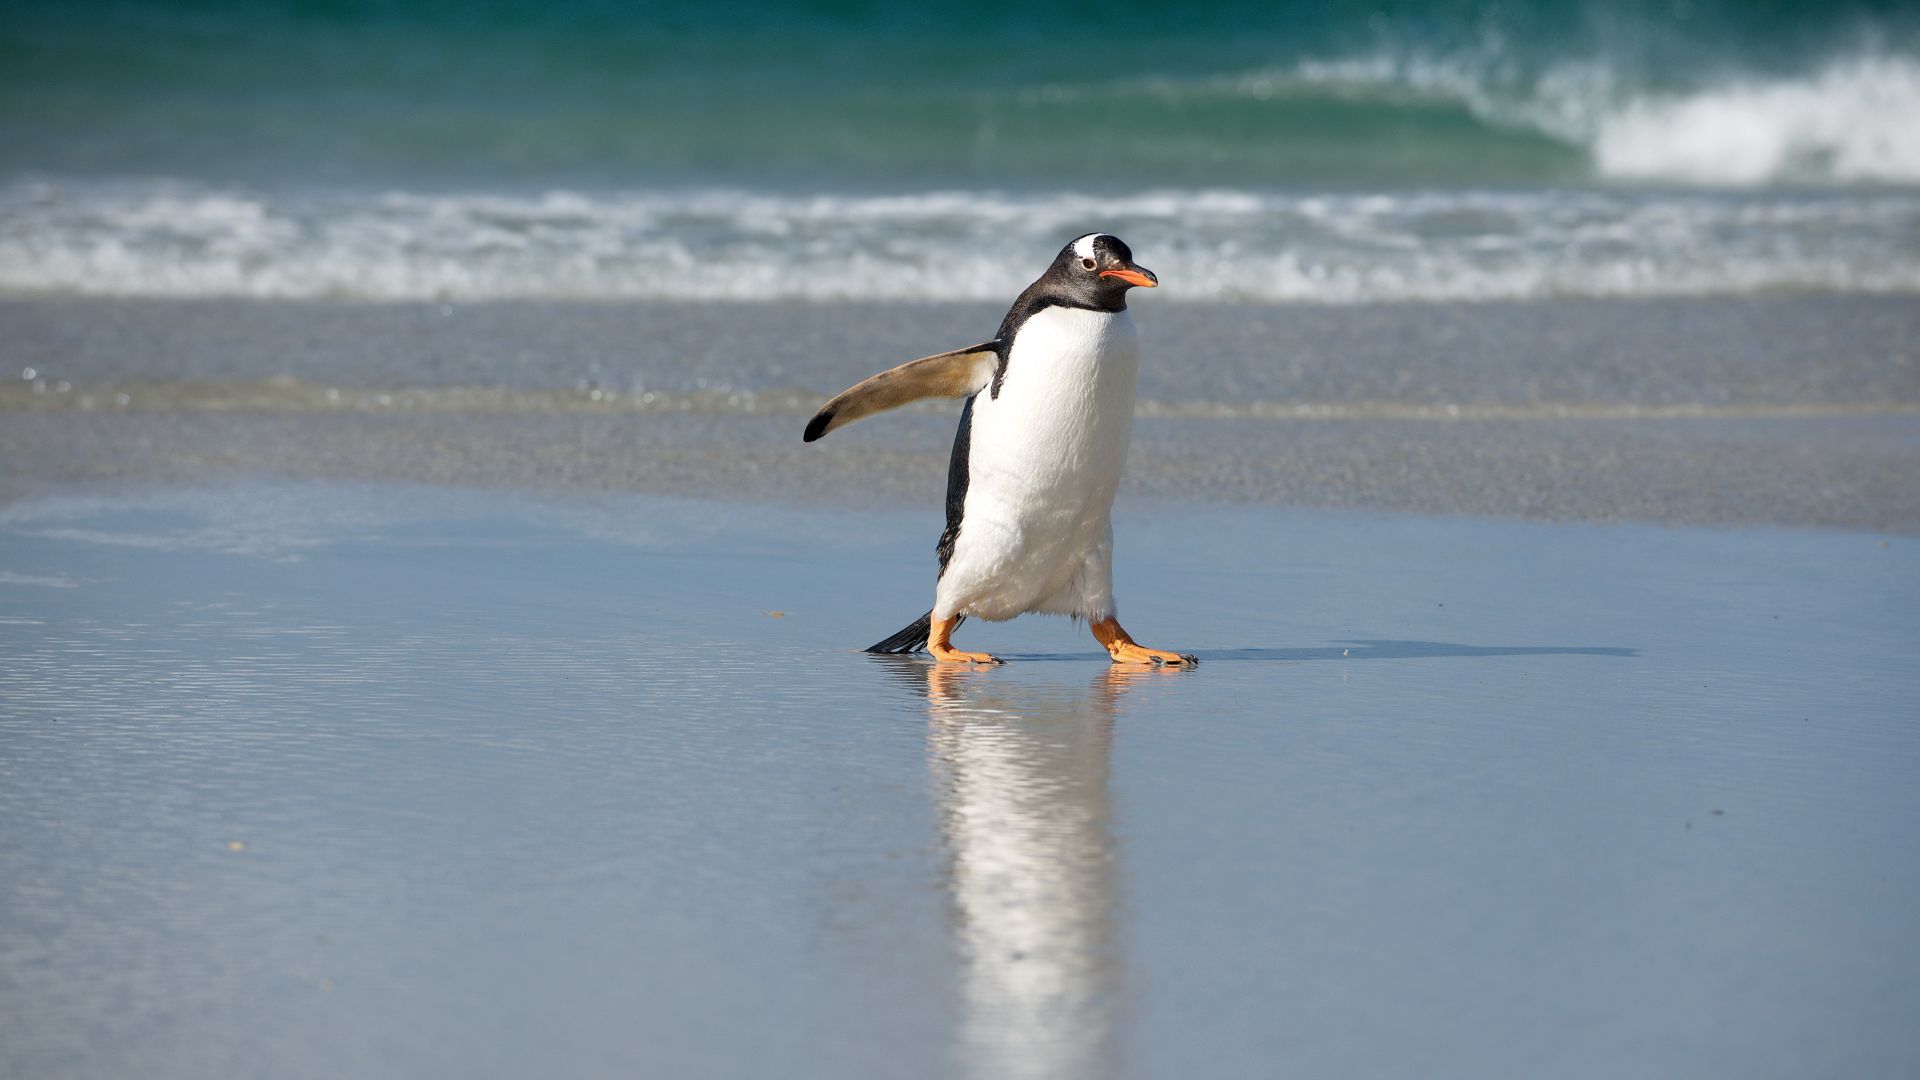 Пингвин, берег, море, океан, милые животные, Pinguin, shore, sea, ocean, cute animals (horizontal)